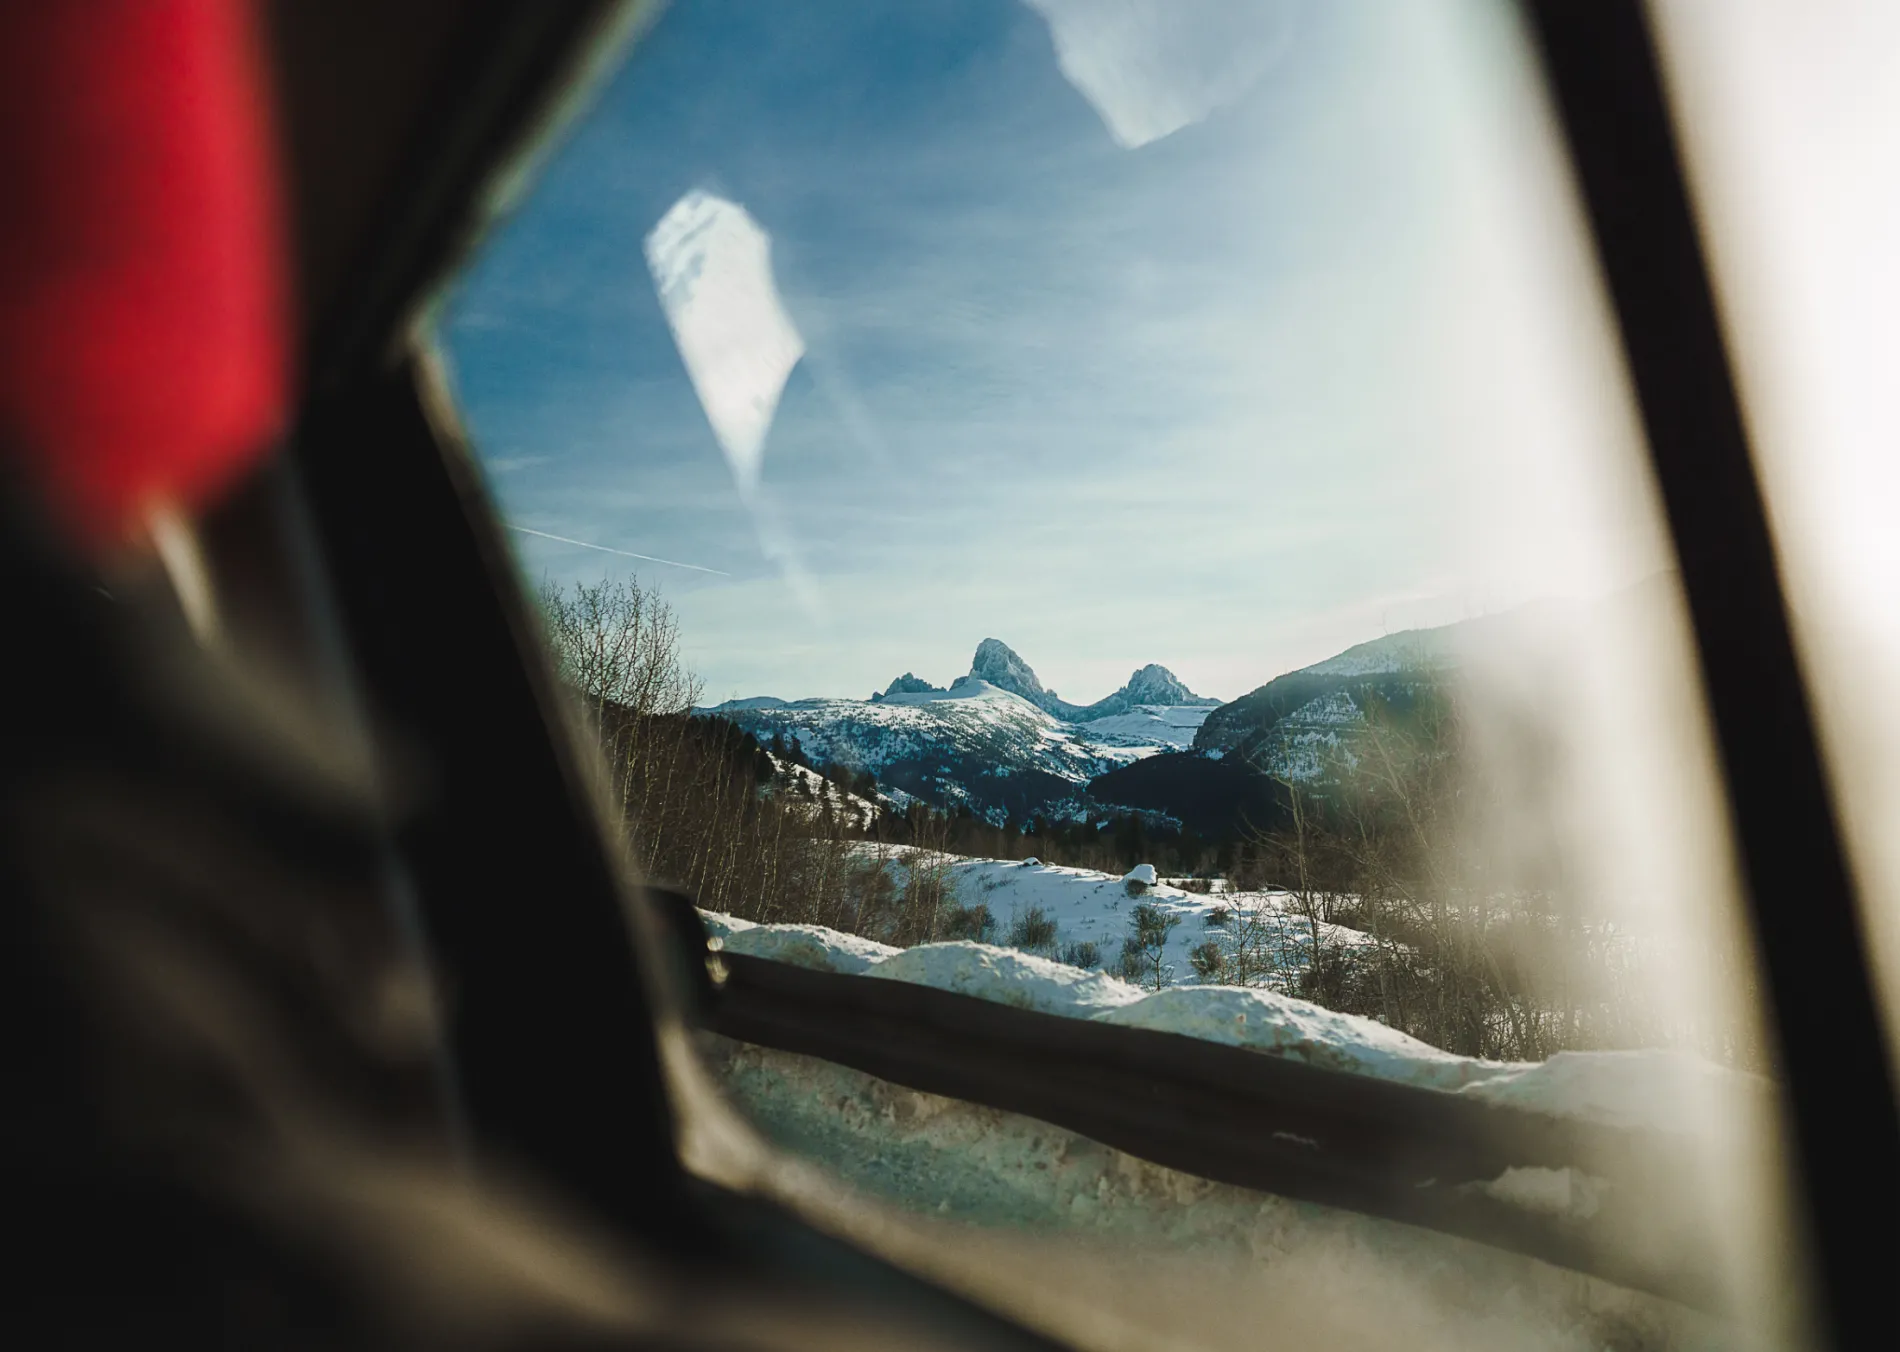 A view of mountains through a car window